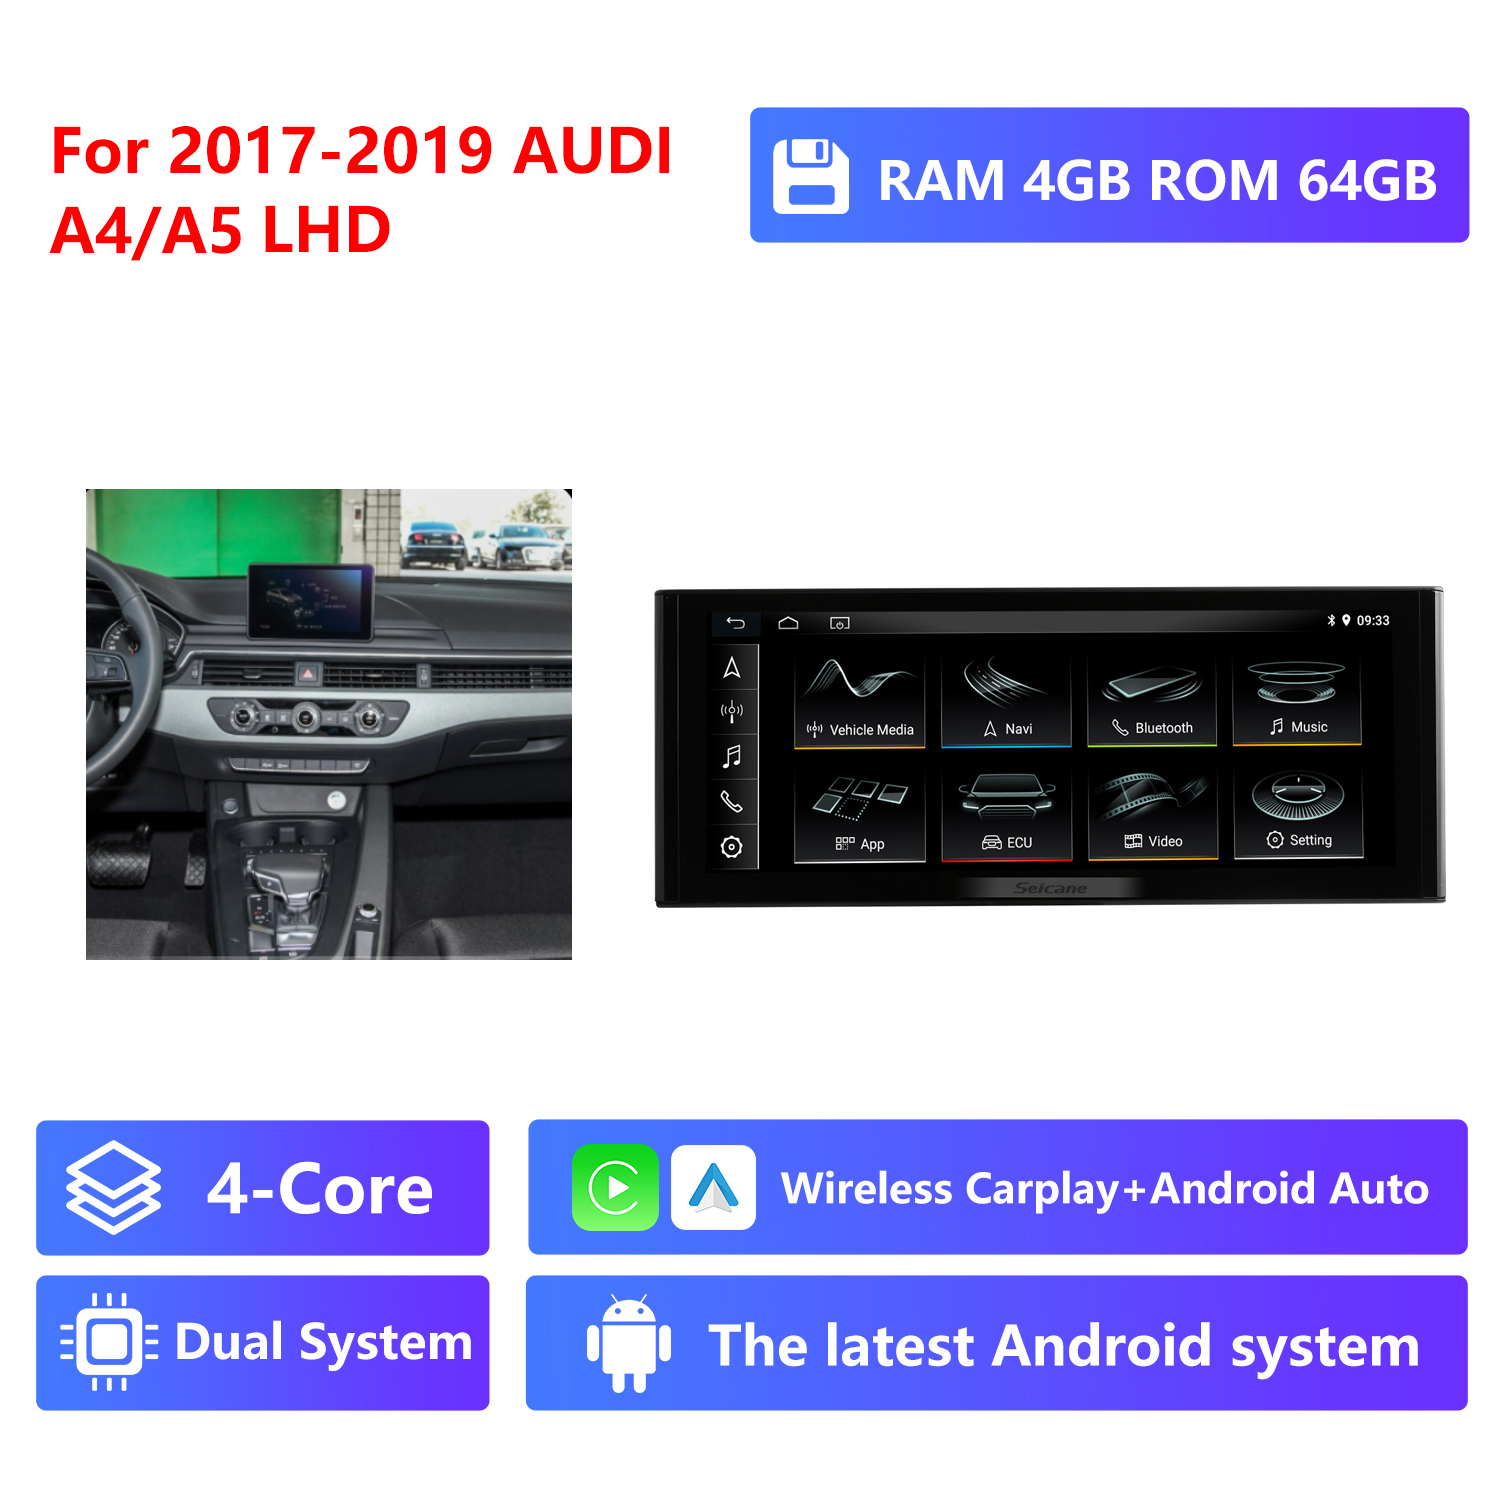 4-Core RAM 4G ROM 64G,2017-2019,Low version,LHD